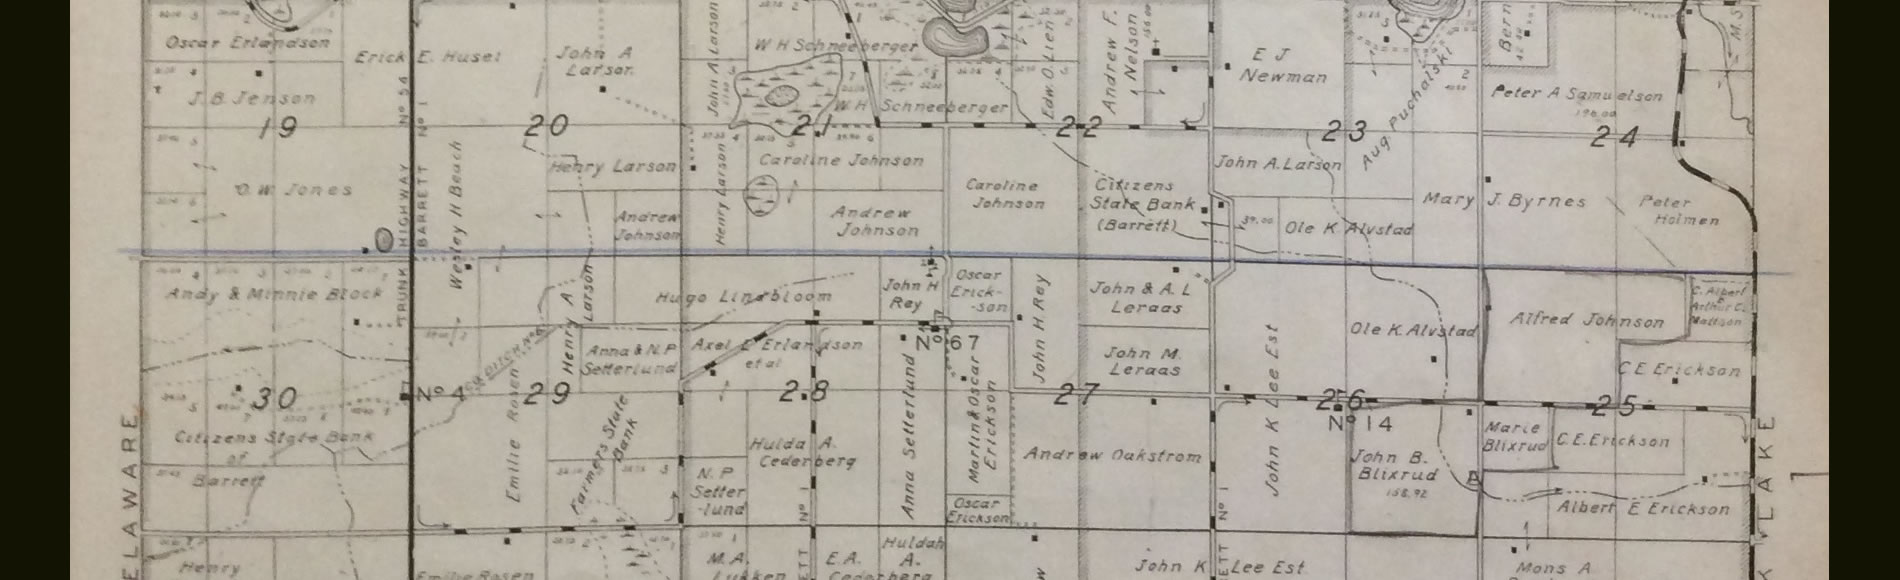 Lien Township Map 1930 - Blixrud Farm